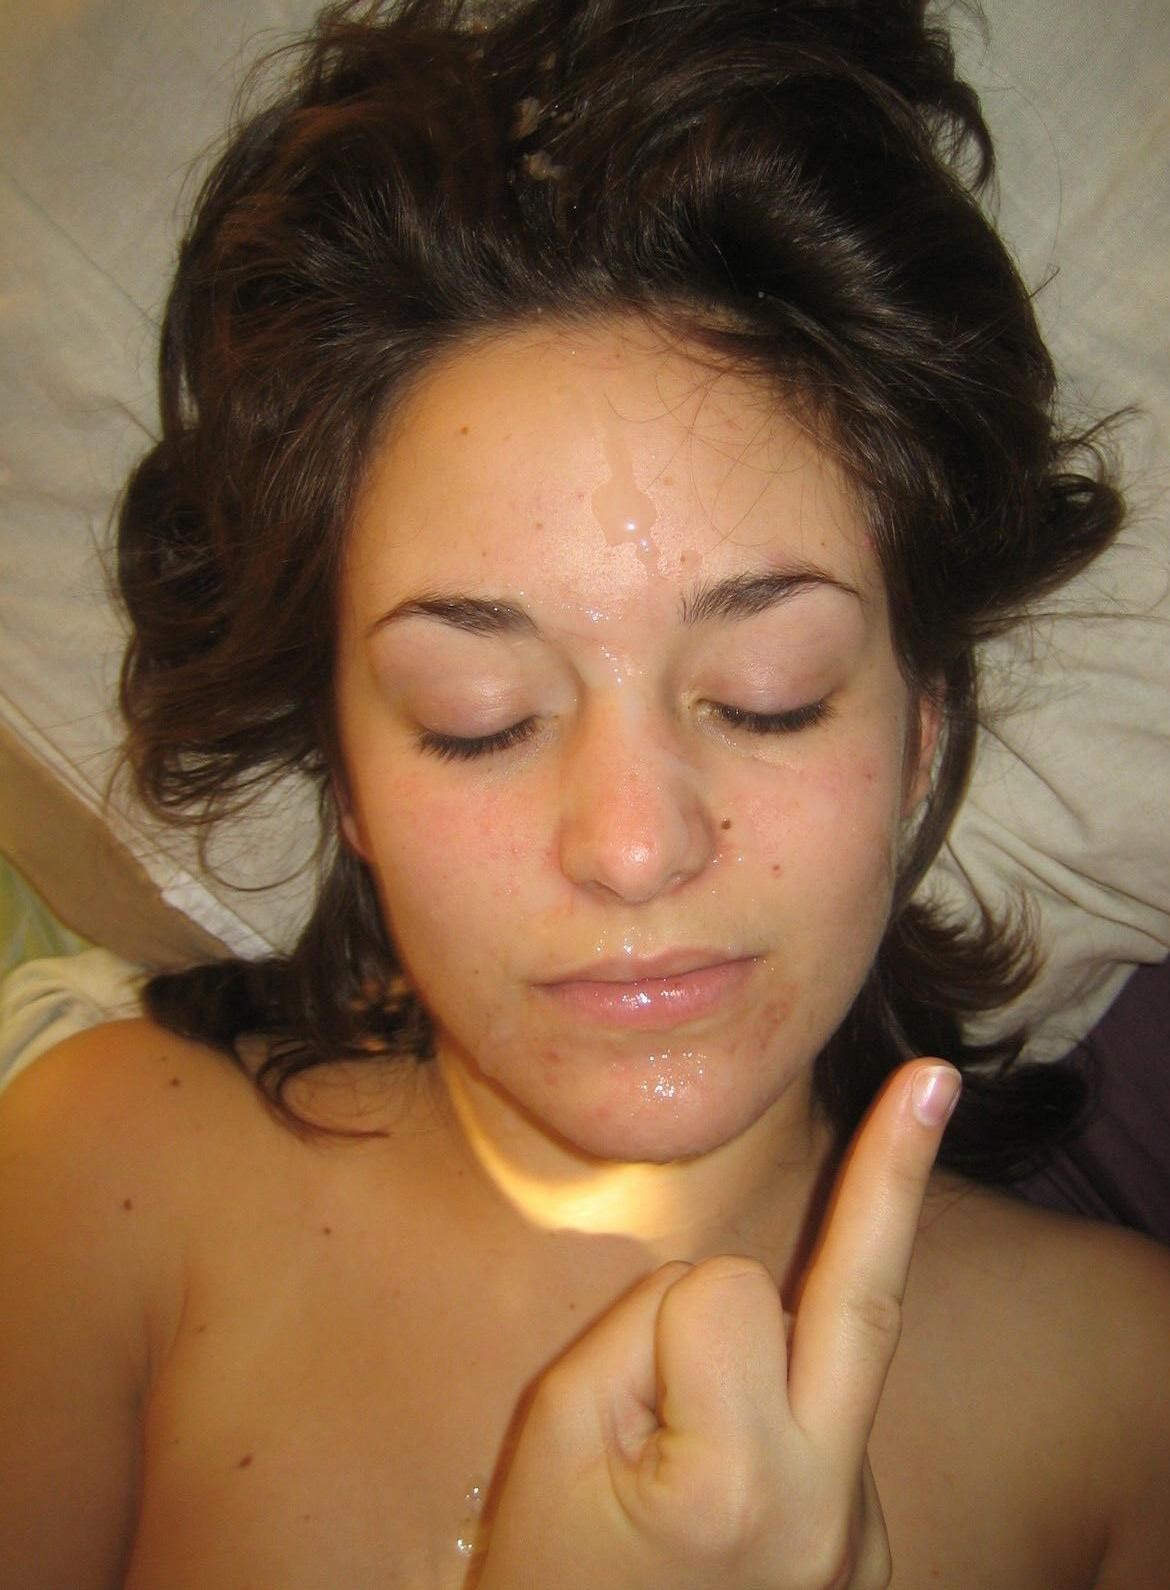 Middle finger facial cumshot (36 pictures) pic